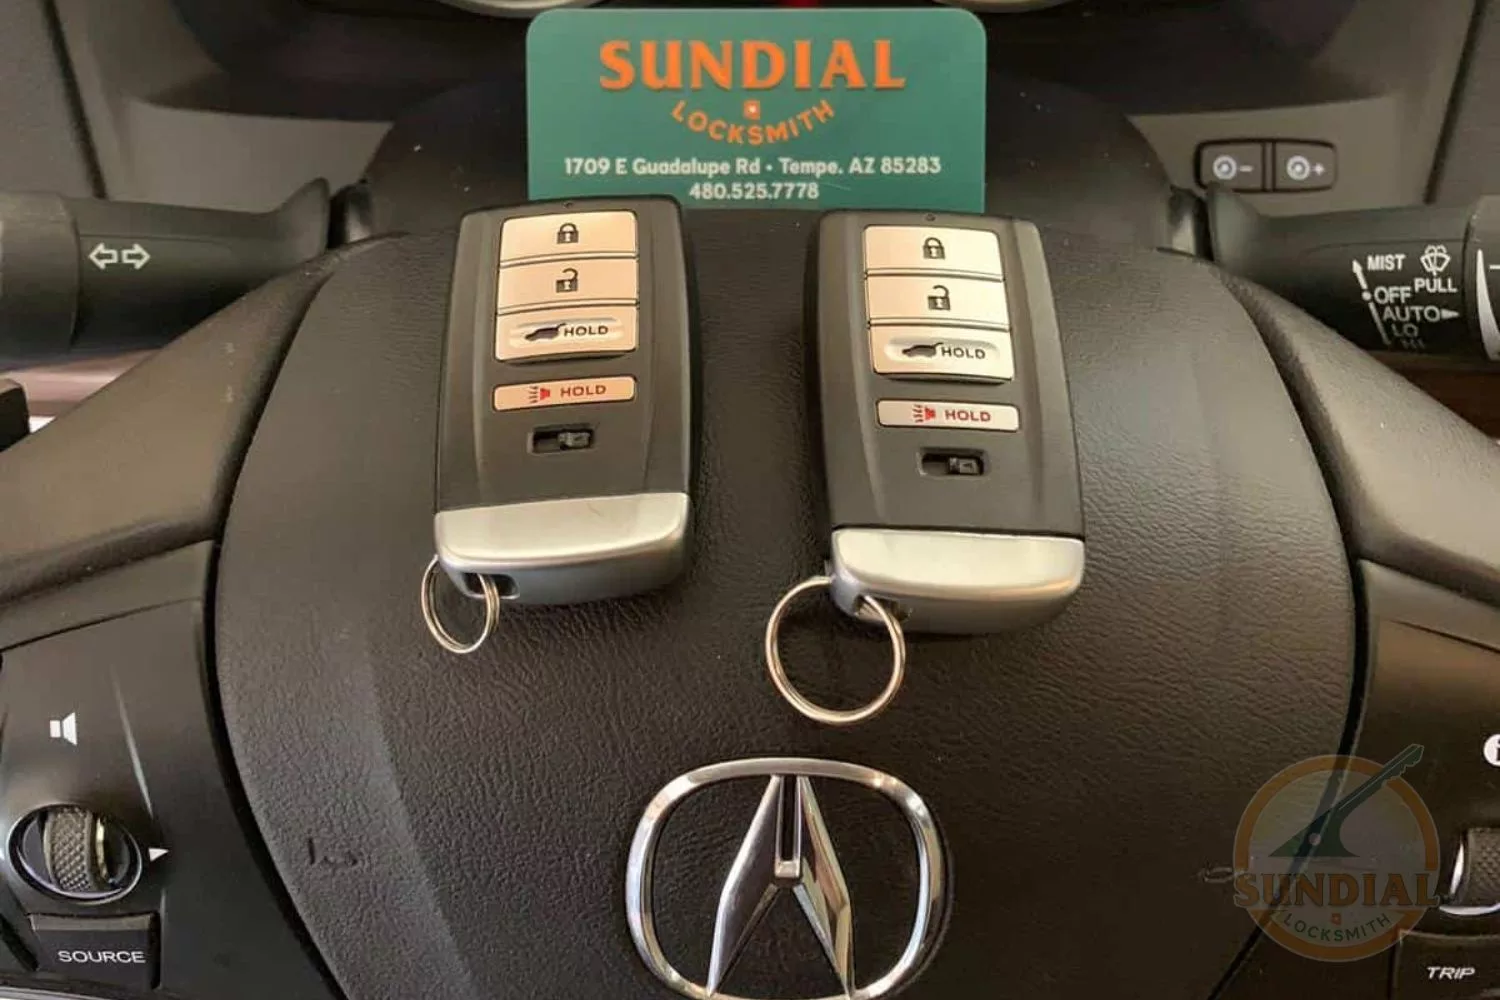 Car keys on steering wheel with locksmith business card.